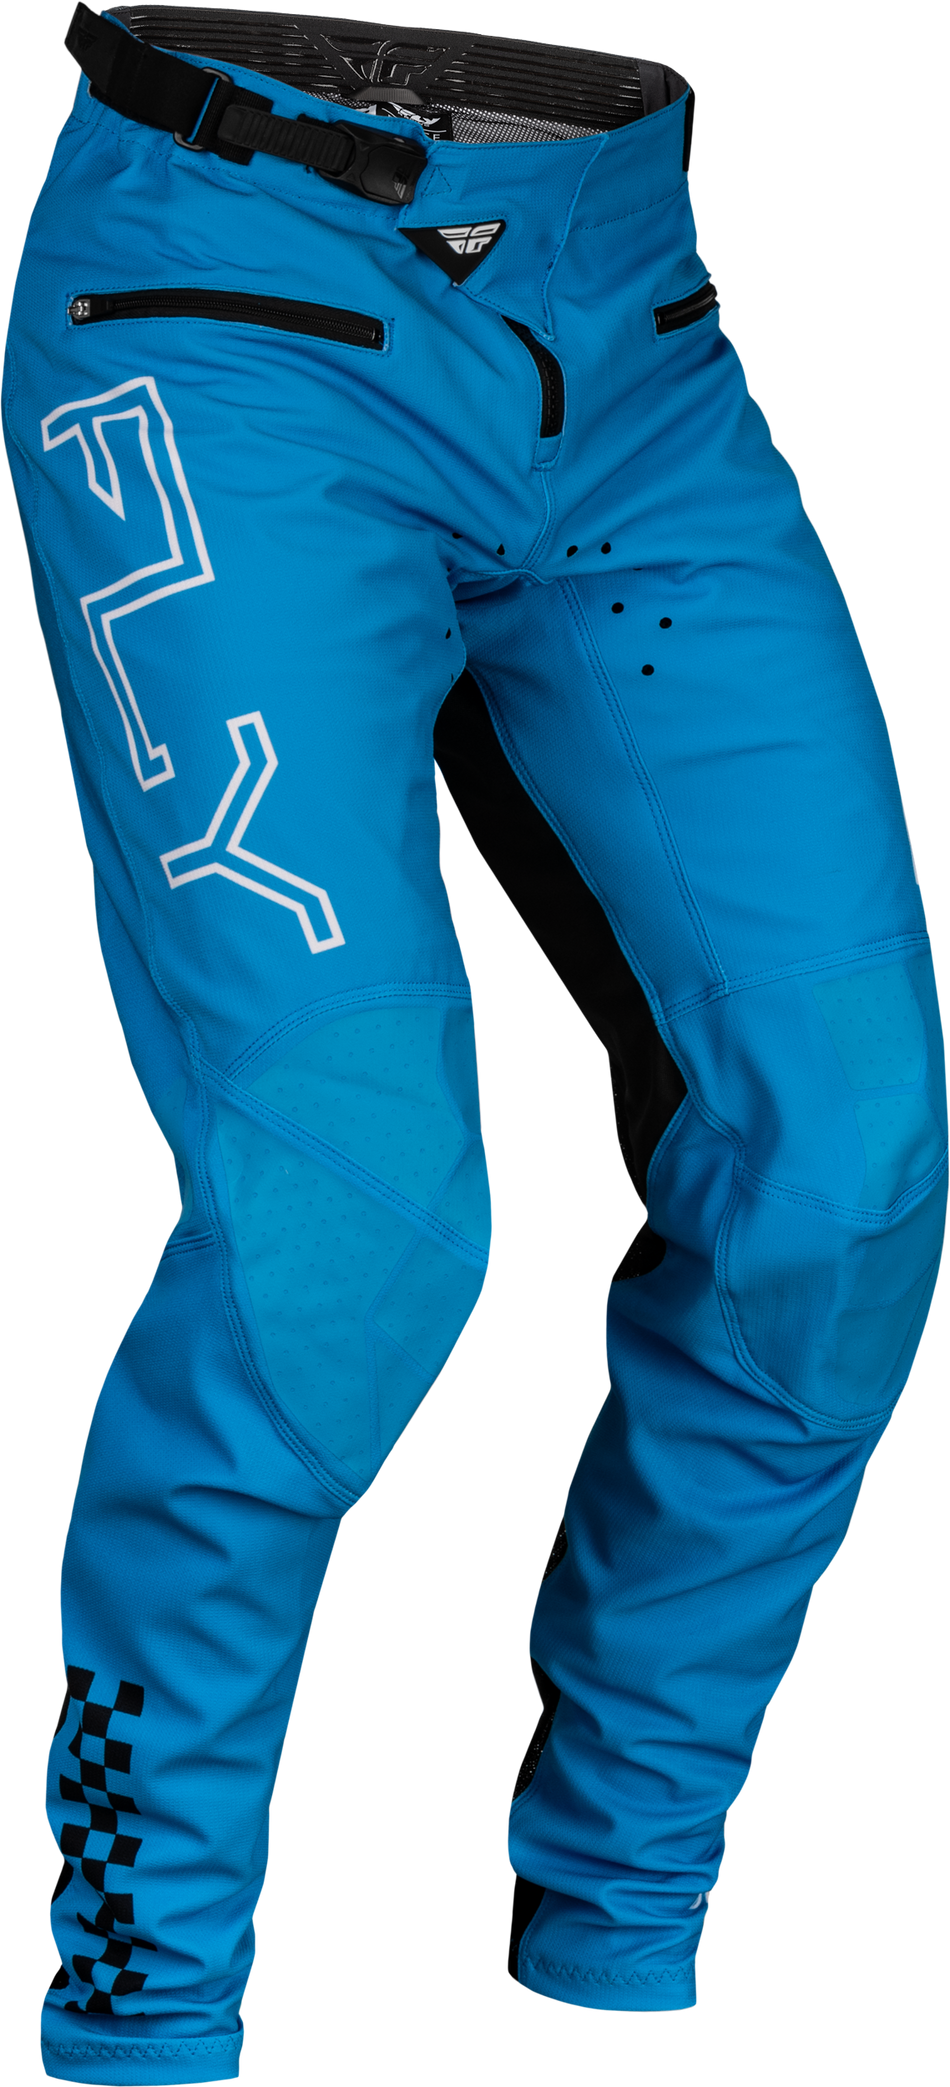 FLY RACING Rayce Bicycle Pants Blue Sz 28 377-06228